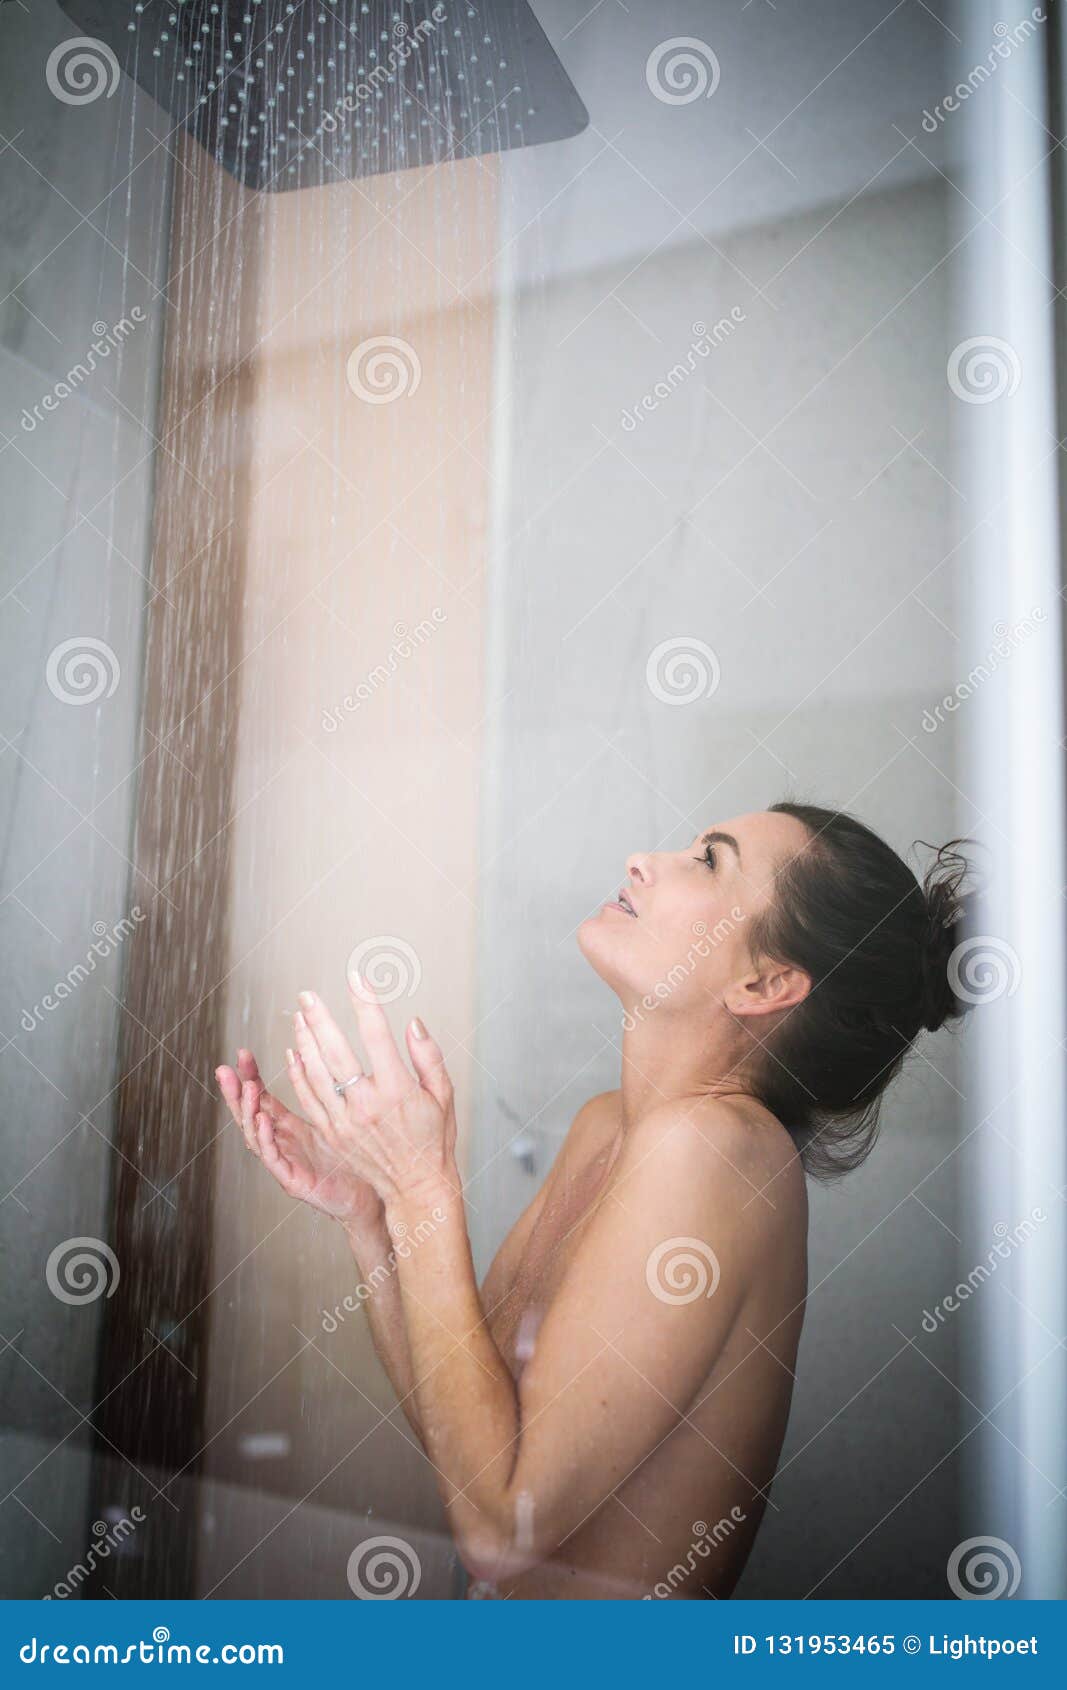 belinda kalviskis recommends hot women taking shower pic